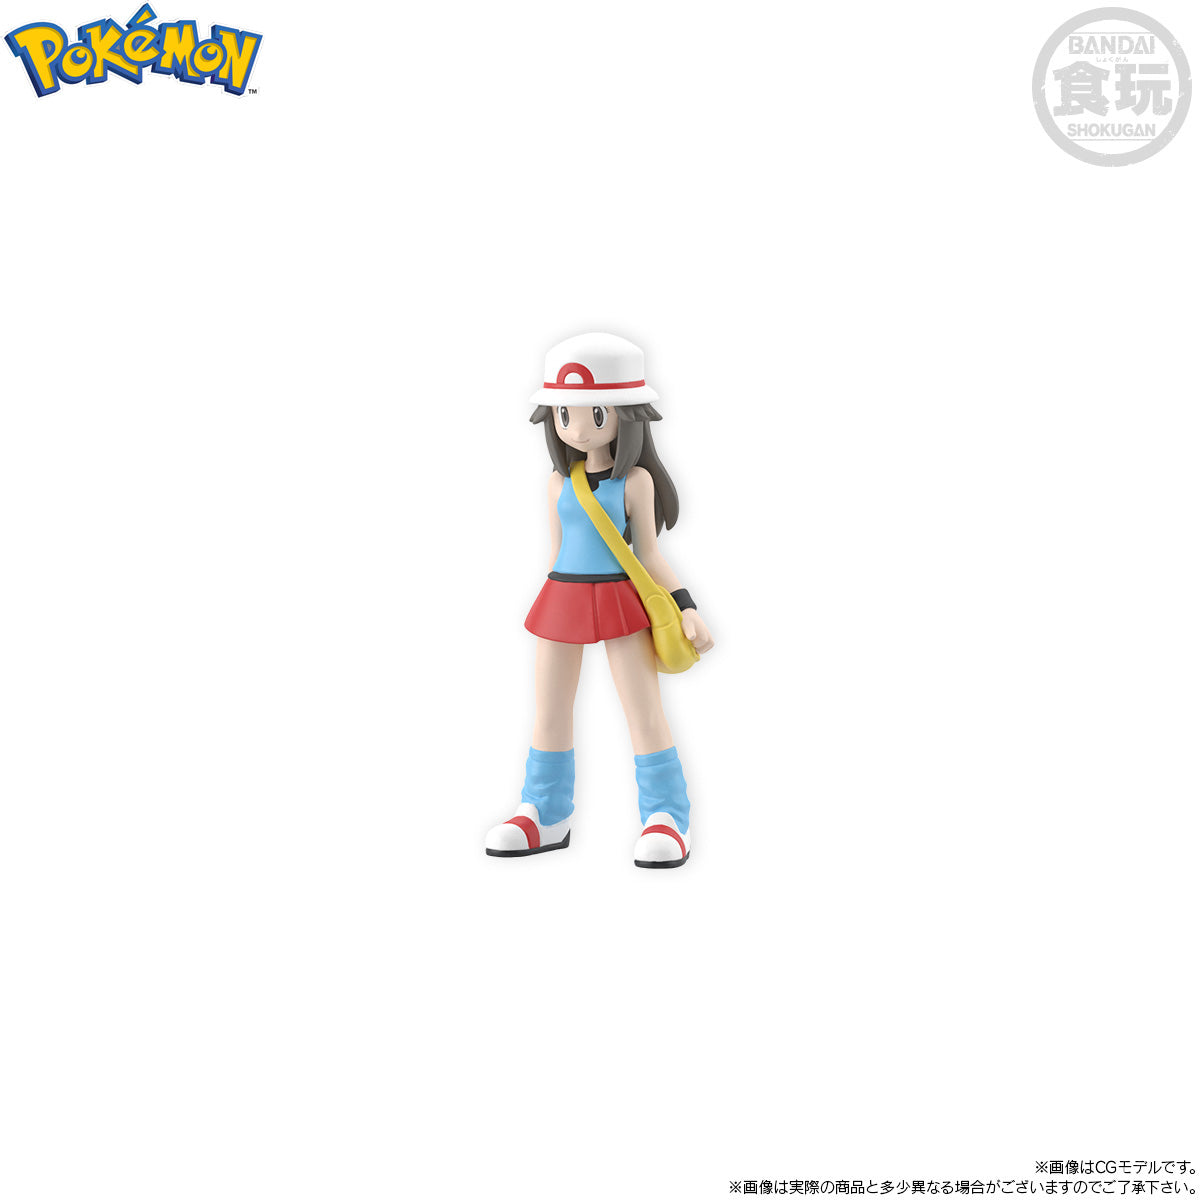 Bandai - Shokugan - Pokemon Scale World Kanto Region - Leaf, Pixi & Gengar - Marvelous Toys